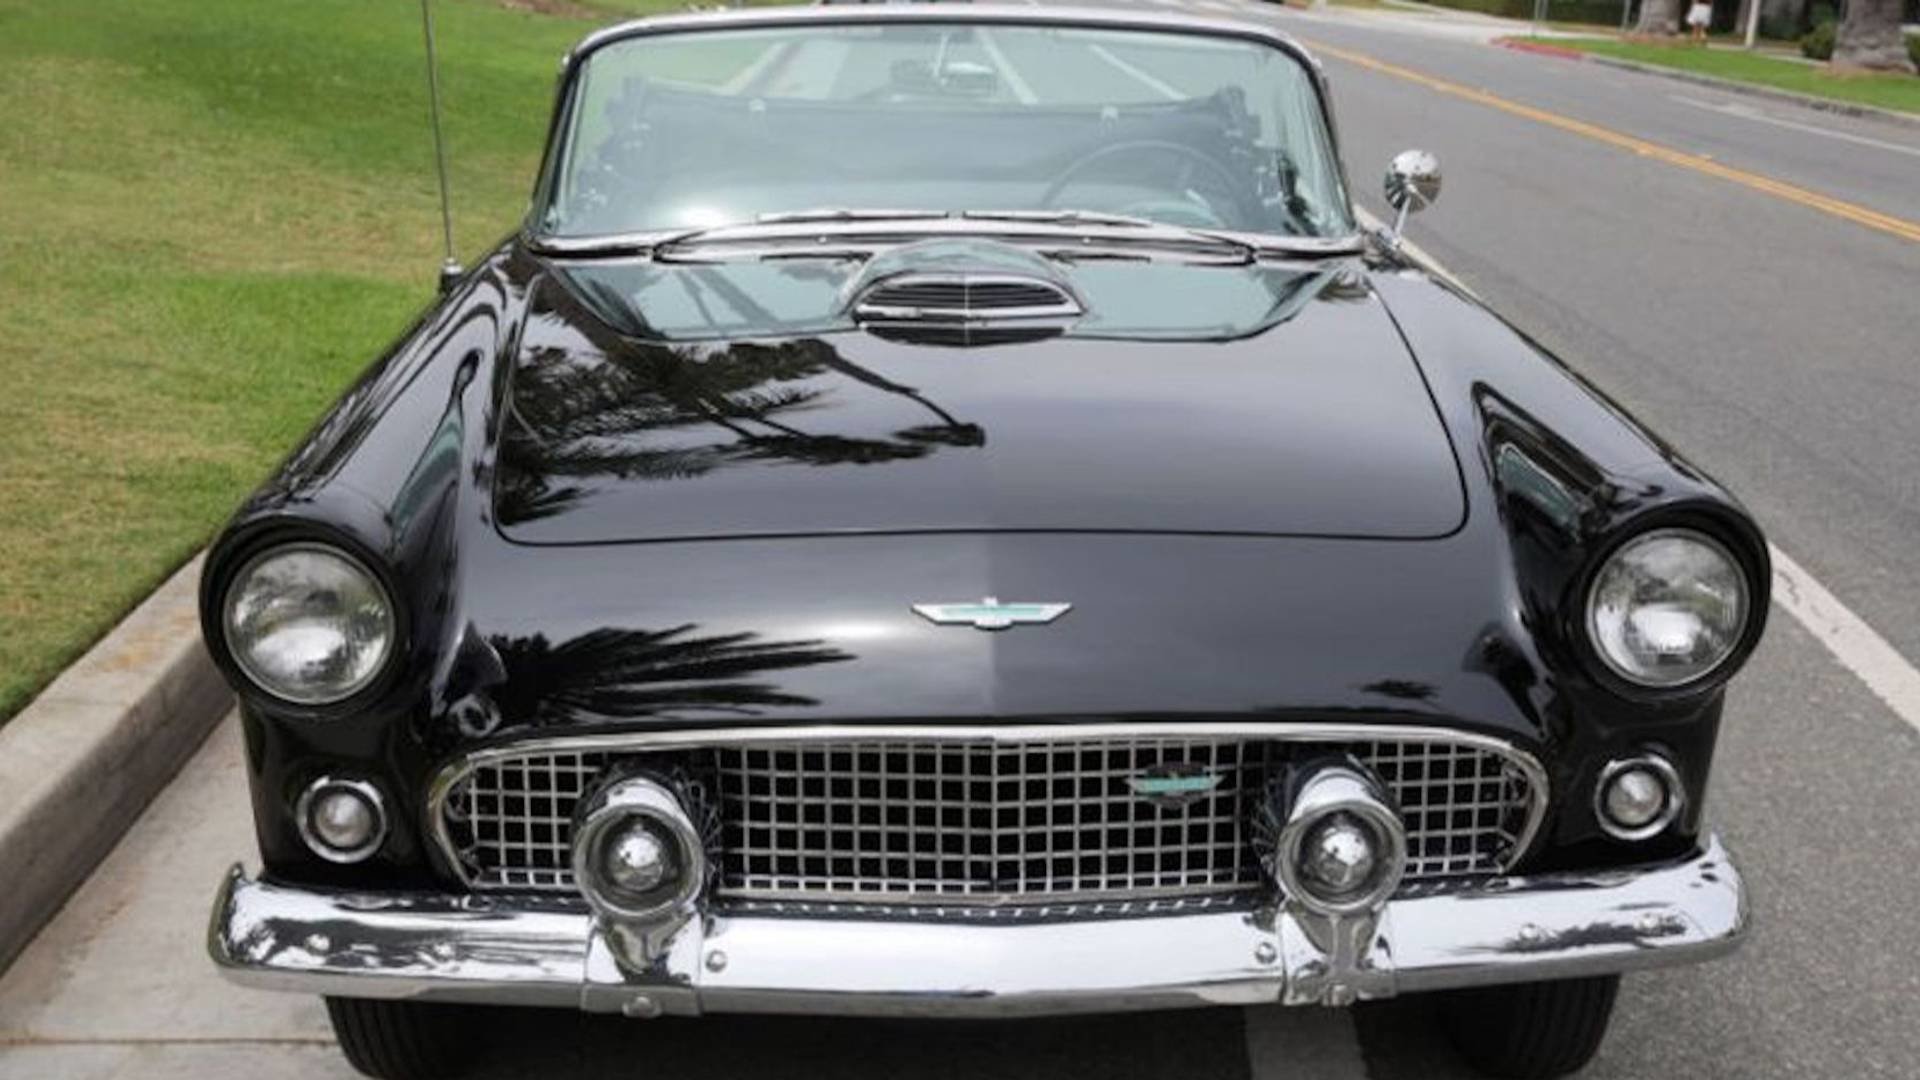 Ford Thunderbird, který mezi lety 1955 až 1962 vlastnila Marilyn Monroe